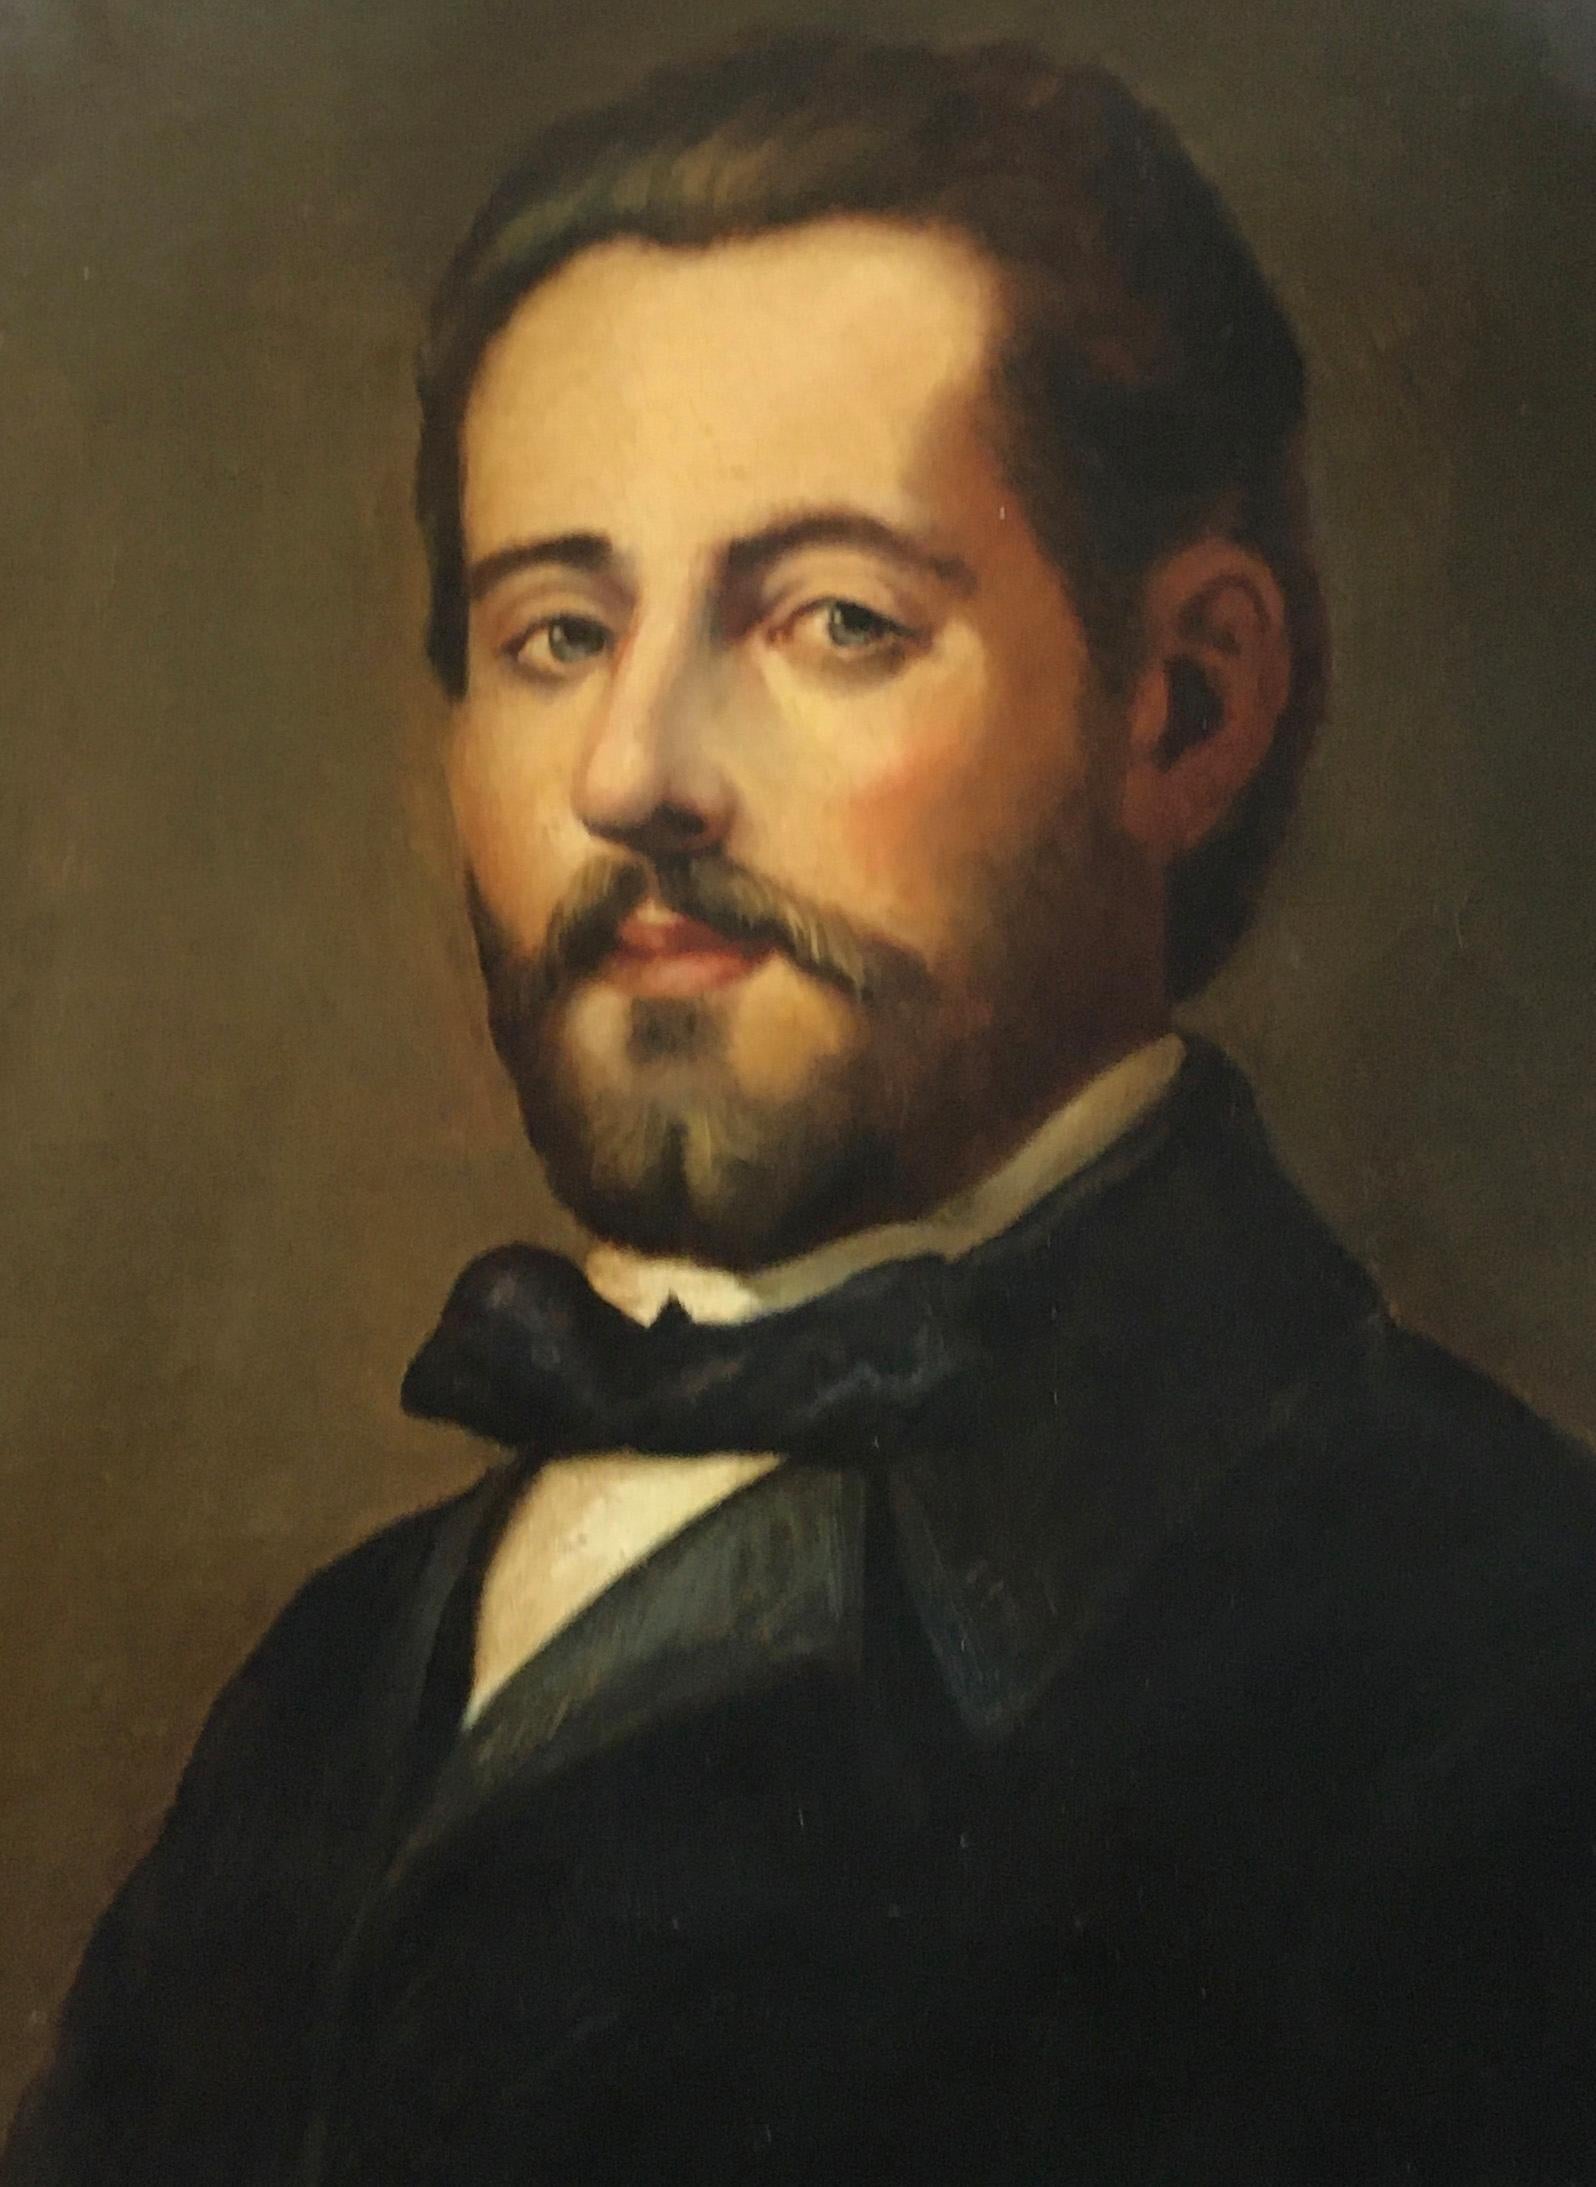 Portrait of a Gentlemen - E. De Blasi Portrait Italian Oil on Canvas Painting - Black Figurative Painting by Eugenio De Blasi